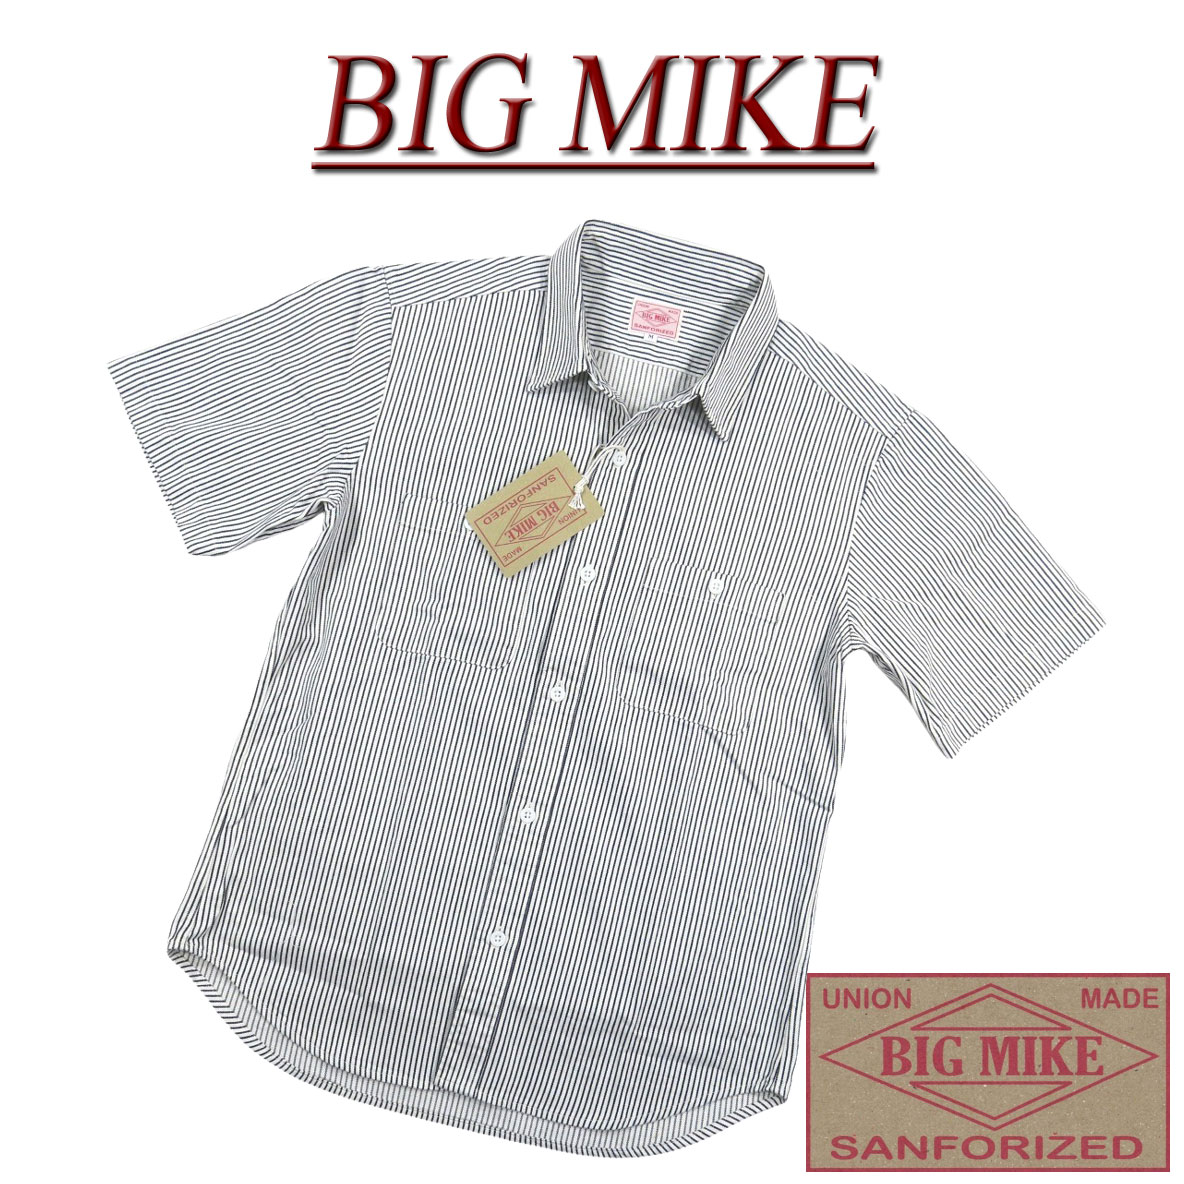  ad172 新品 BIG MIKE 復刻 日本製 ヒッコリーストライプ 半袖 ワークシャツ 102025600 102125600 メンズ ビッグマイク HICKORY STRIPES S/S WORK SHIRTS BIGMIKE Made in JAPAN 